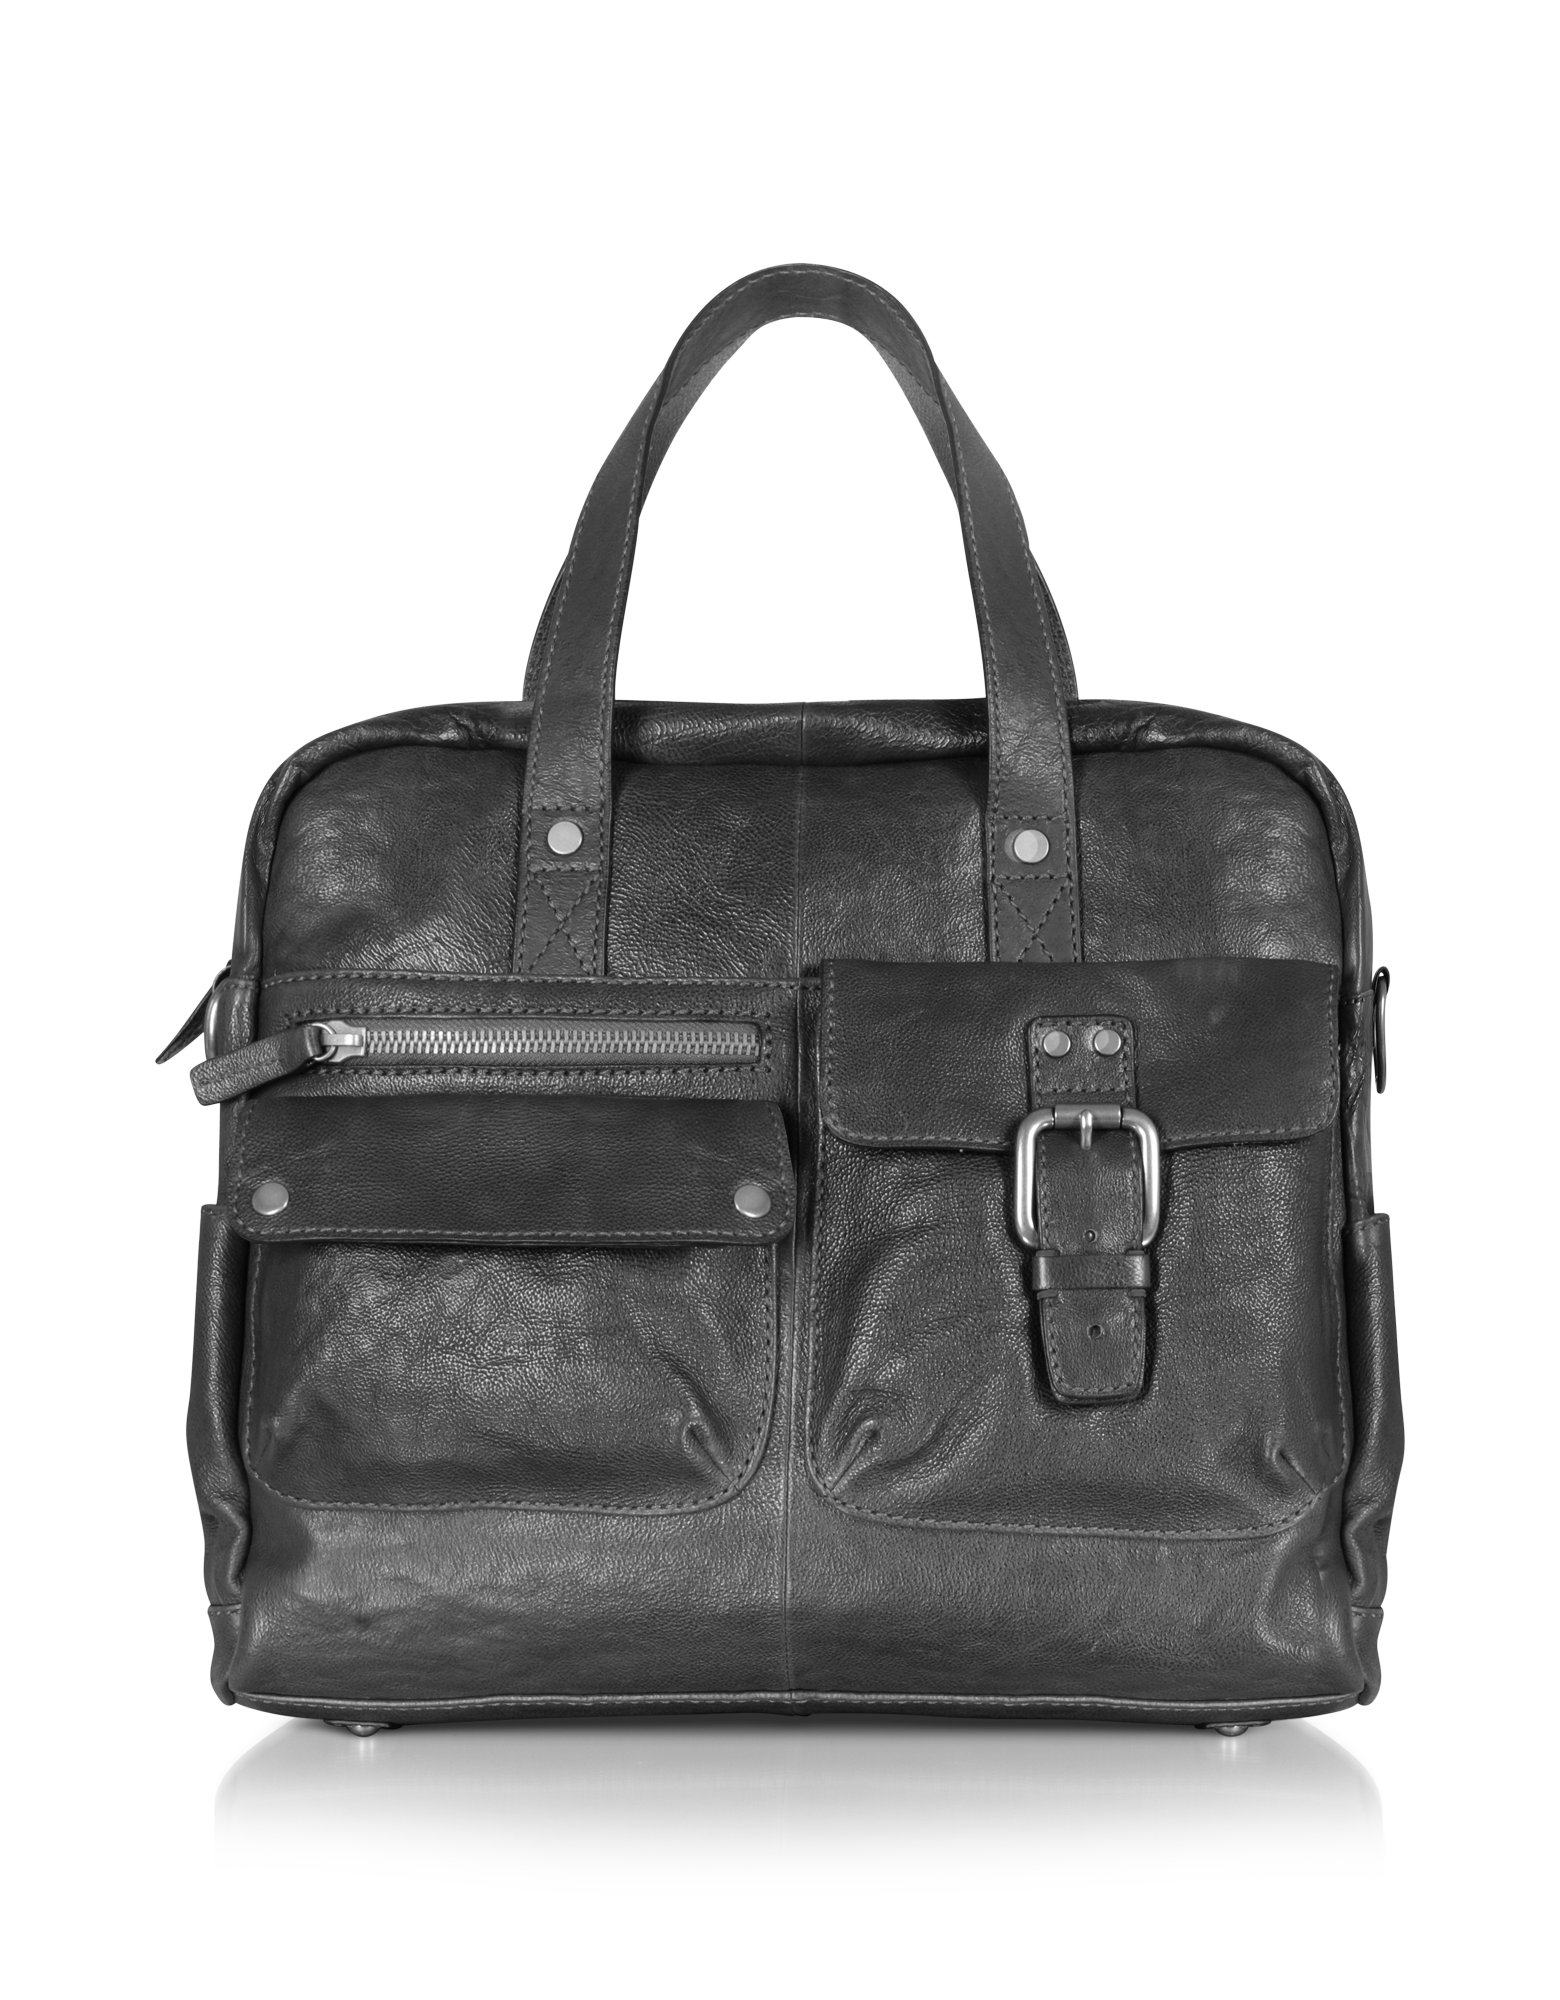 Fossil Decker - Leather Messenger Bag in Black for Men | Lyst